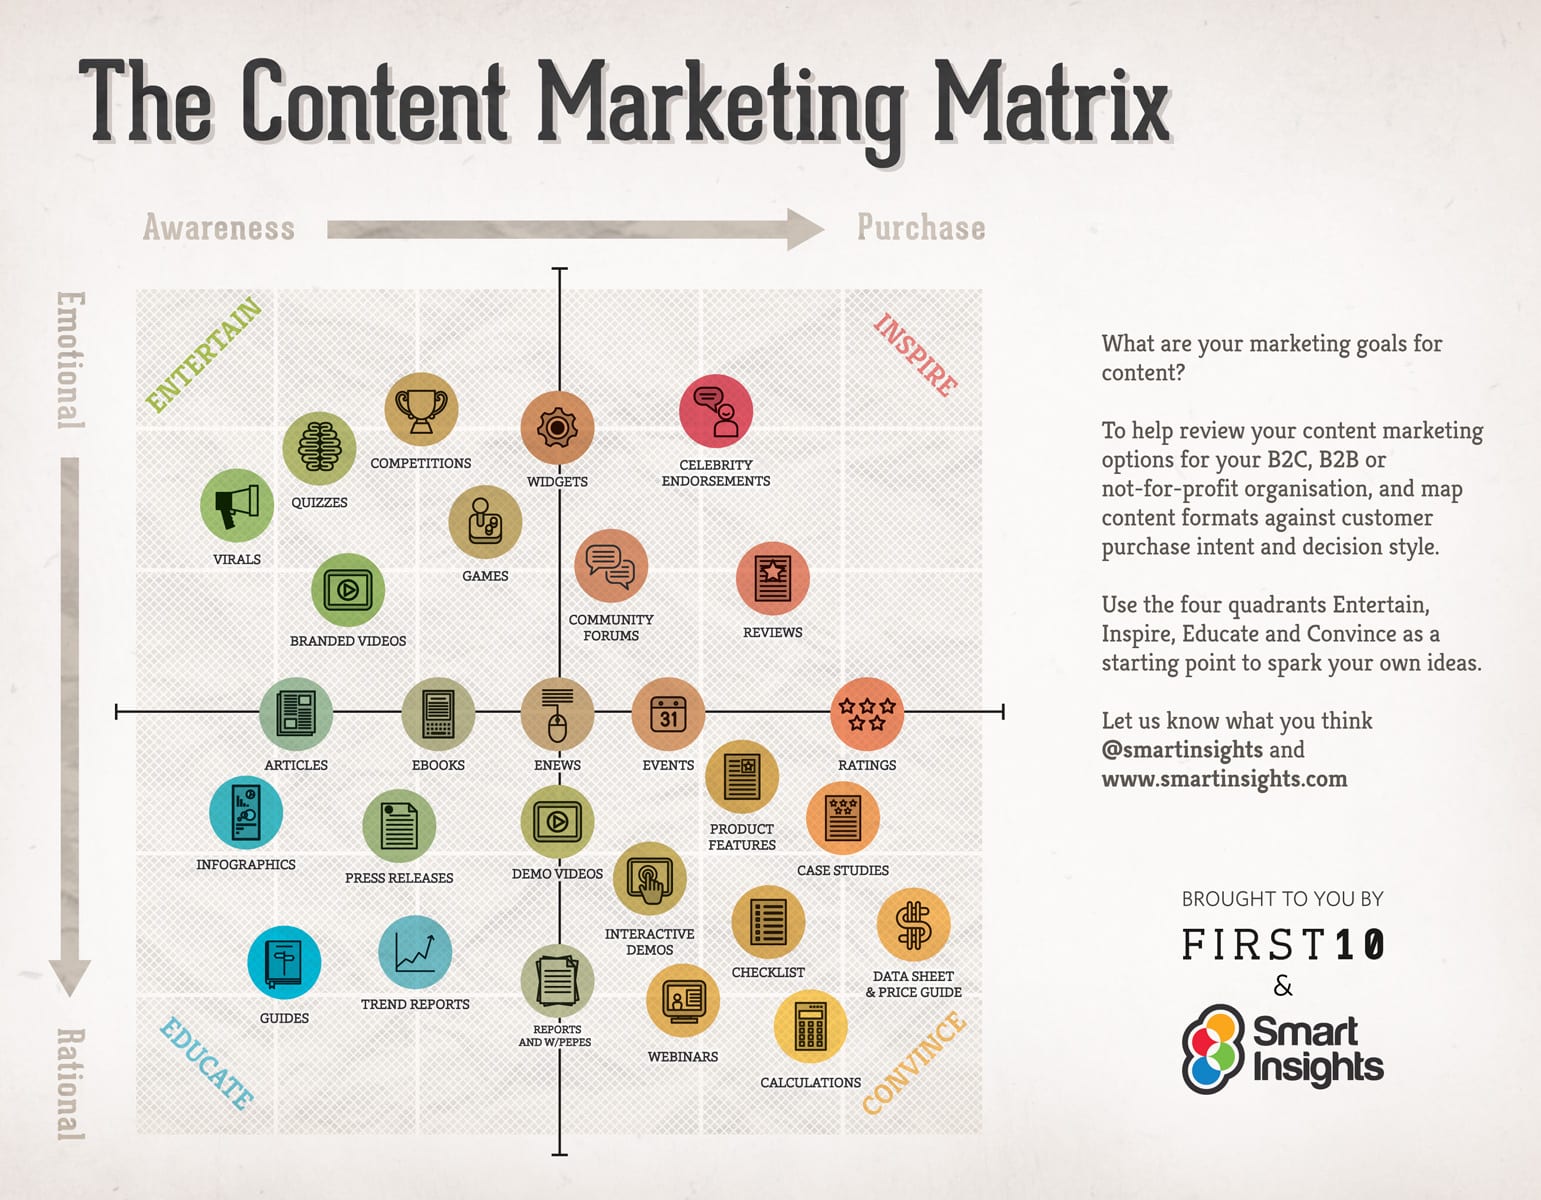 The content marketing matrix